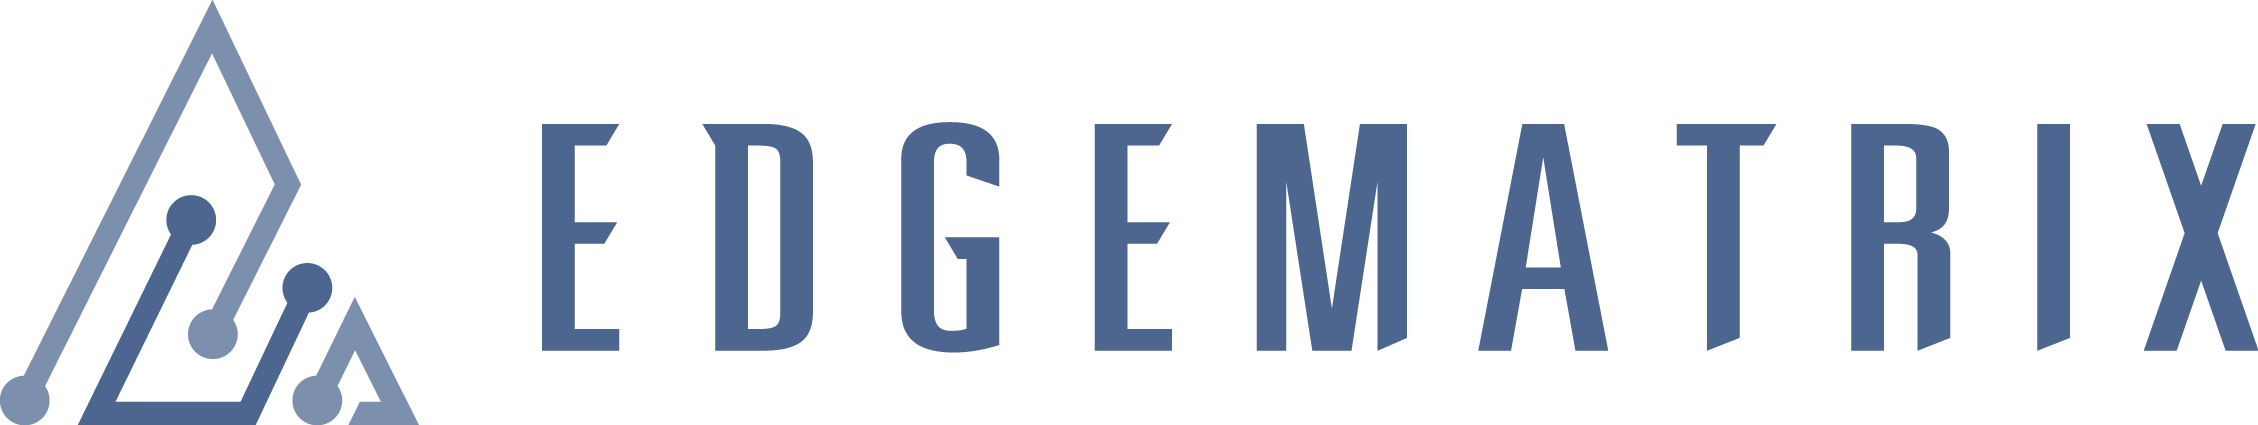 EDGEMATRIX logo